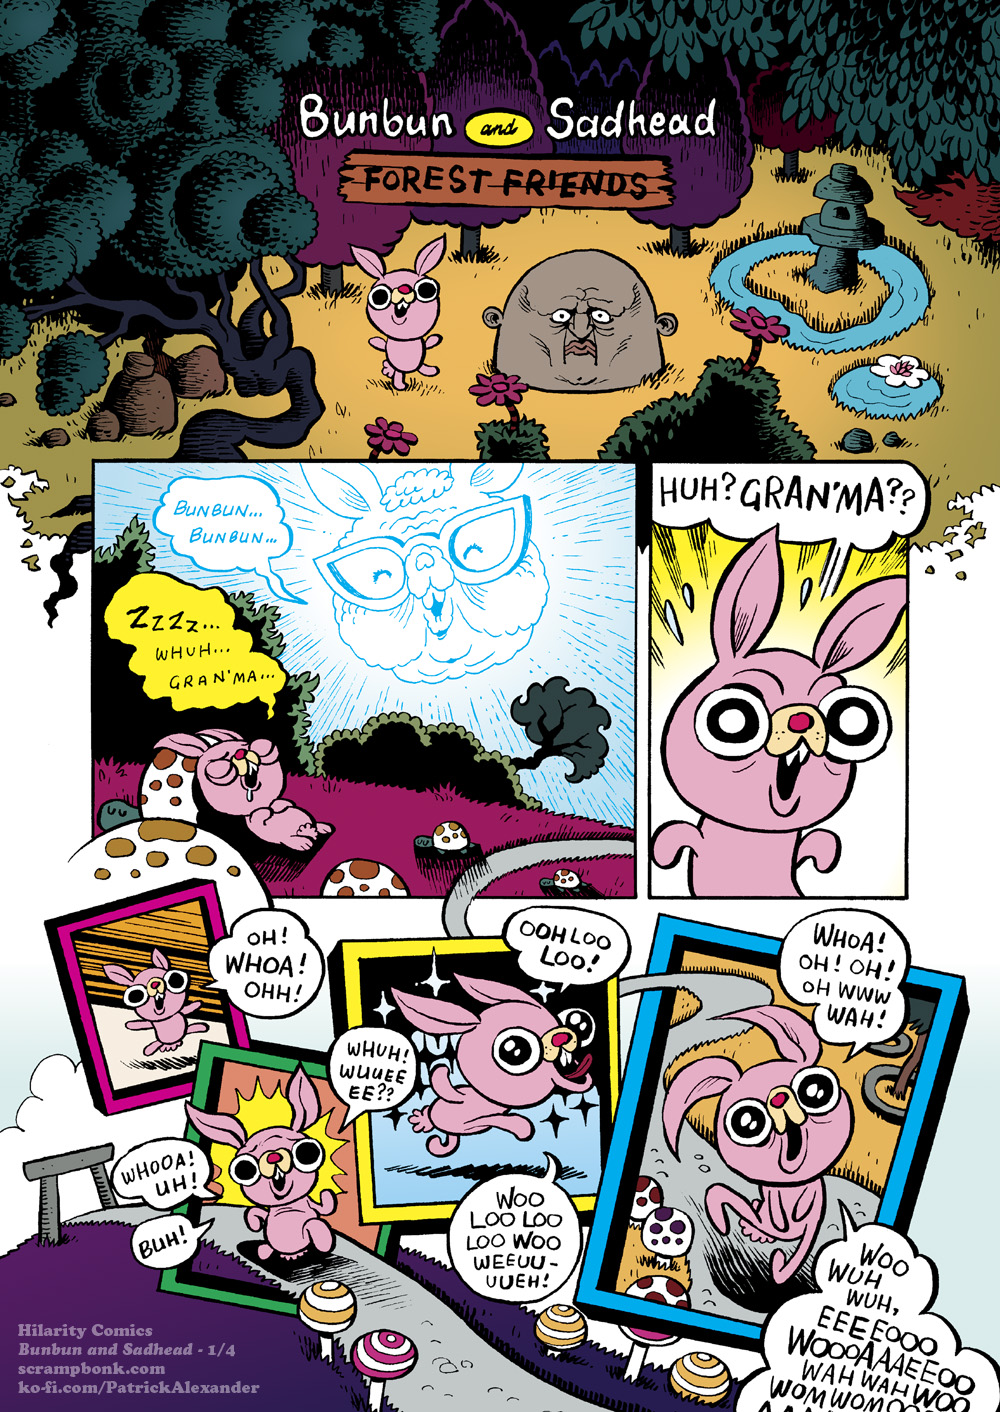 Bunbun and Sadhead by Patrick Alexander, page 1